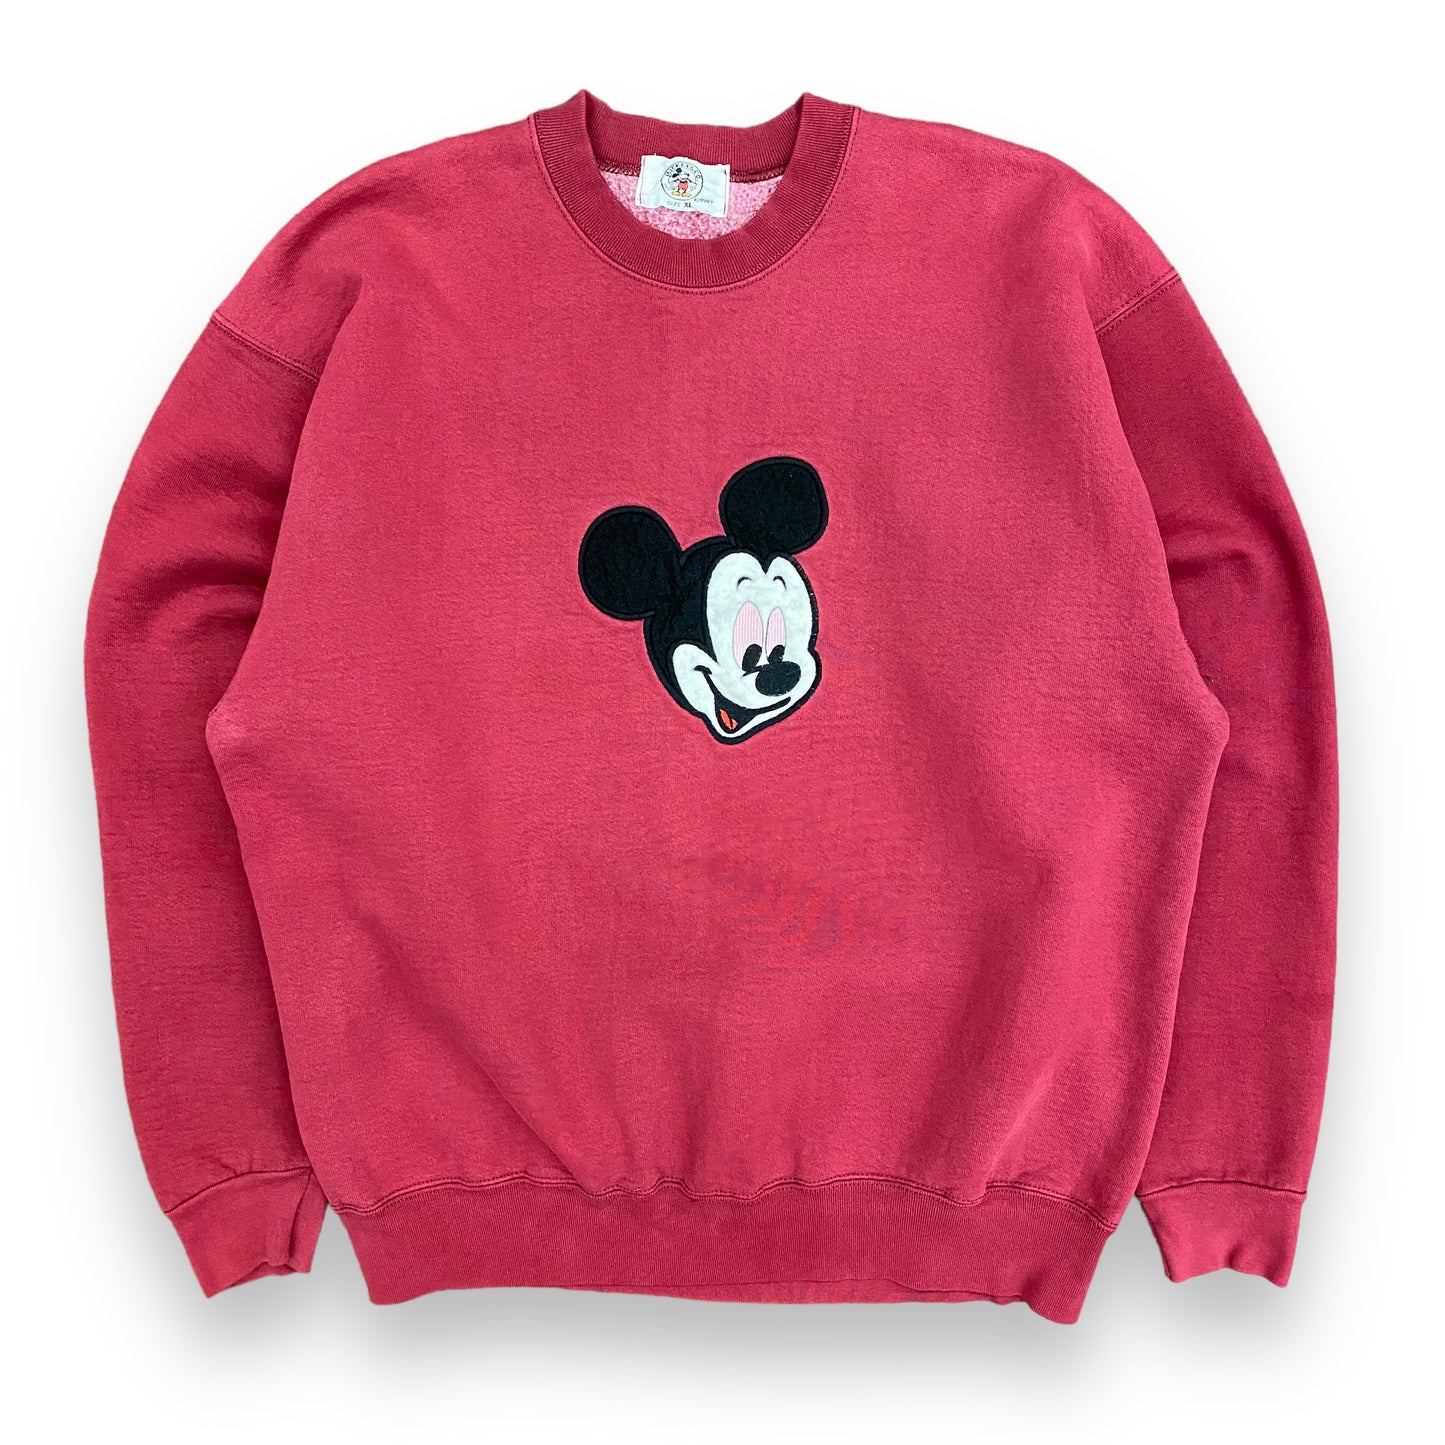 1980s Mickey & Co. Red/Maroon Crewneck Sweatshirt - Size XL